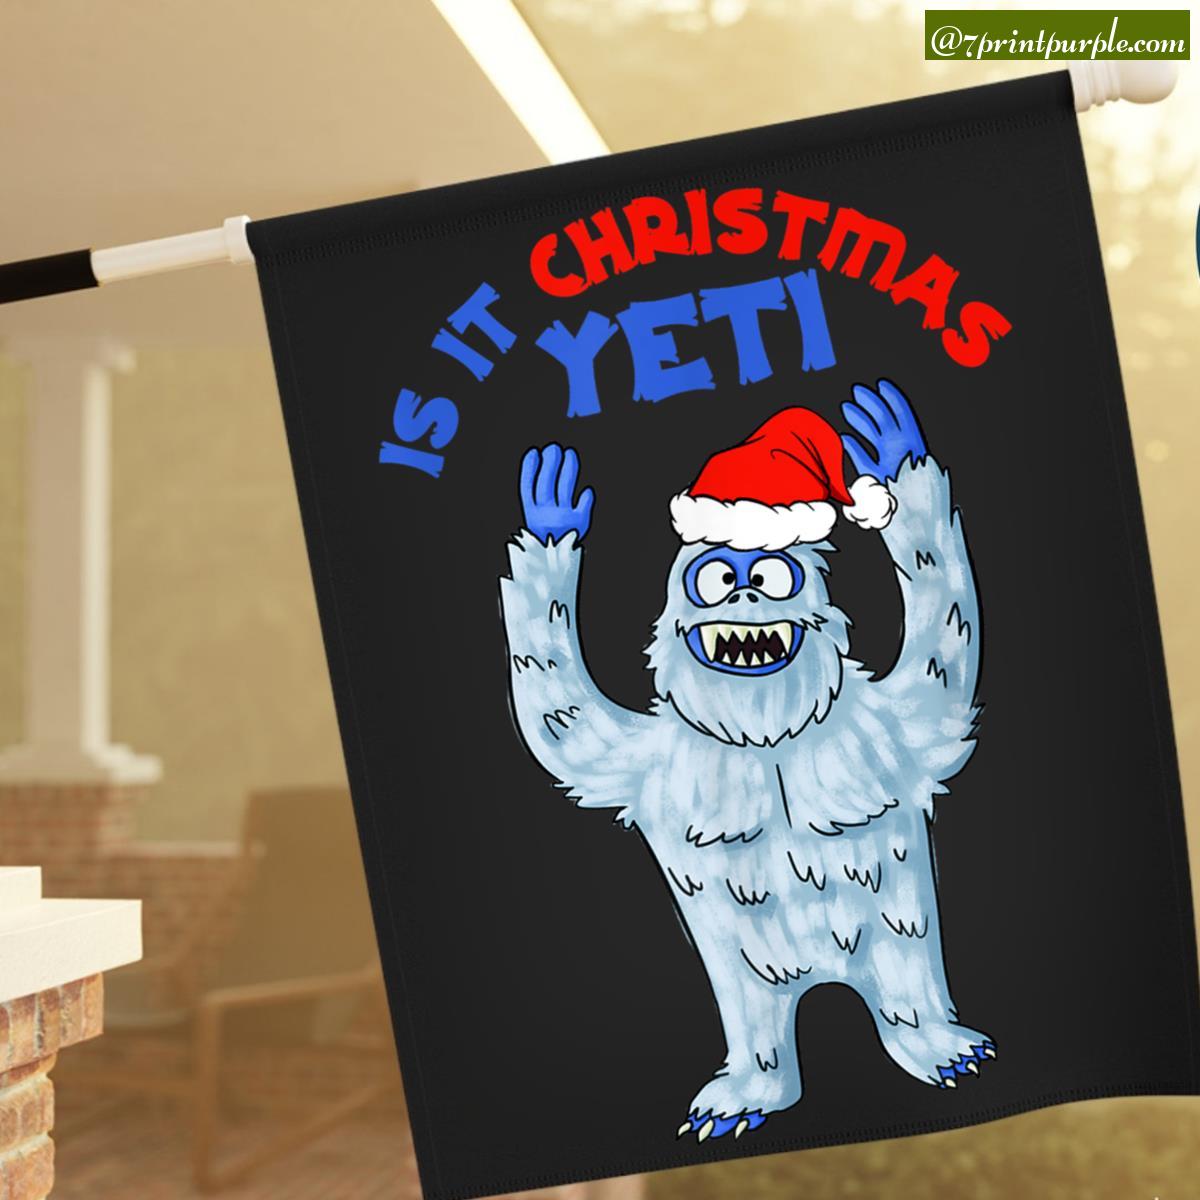 https://cdn.7printpurple.com/uploads/0910/Abominable-Snowman-Is-It-Christmas-Yeti-Monster-2.jpg